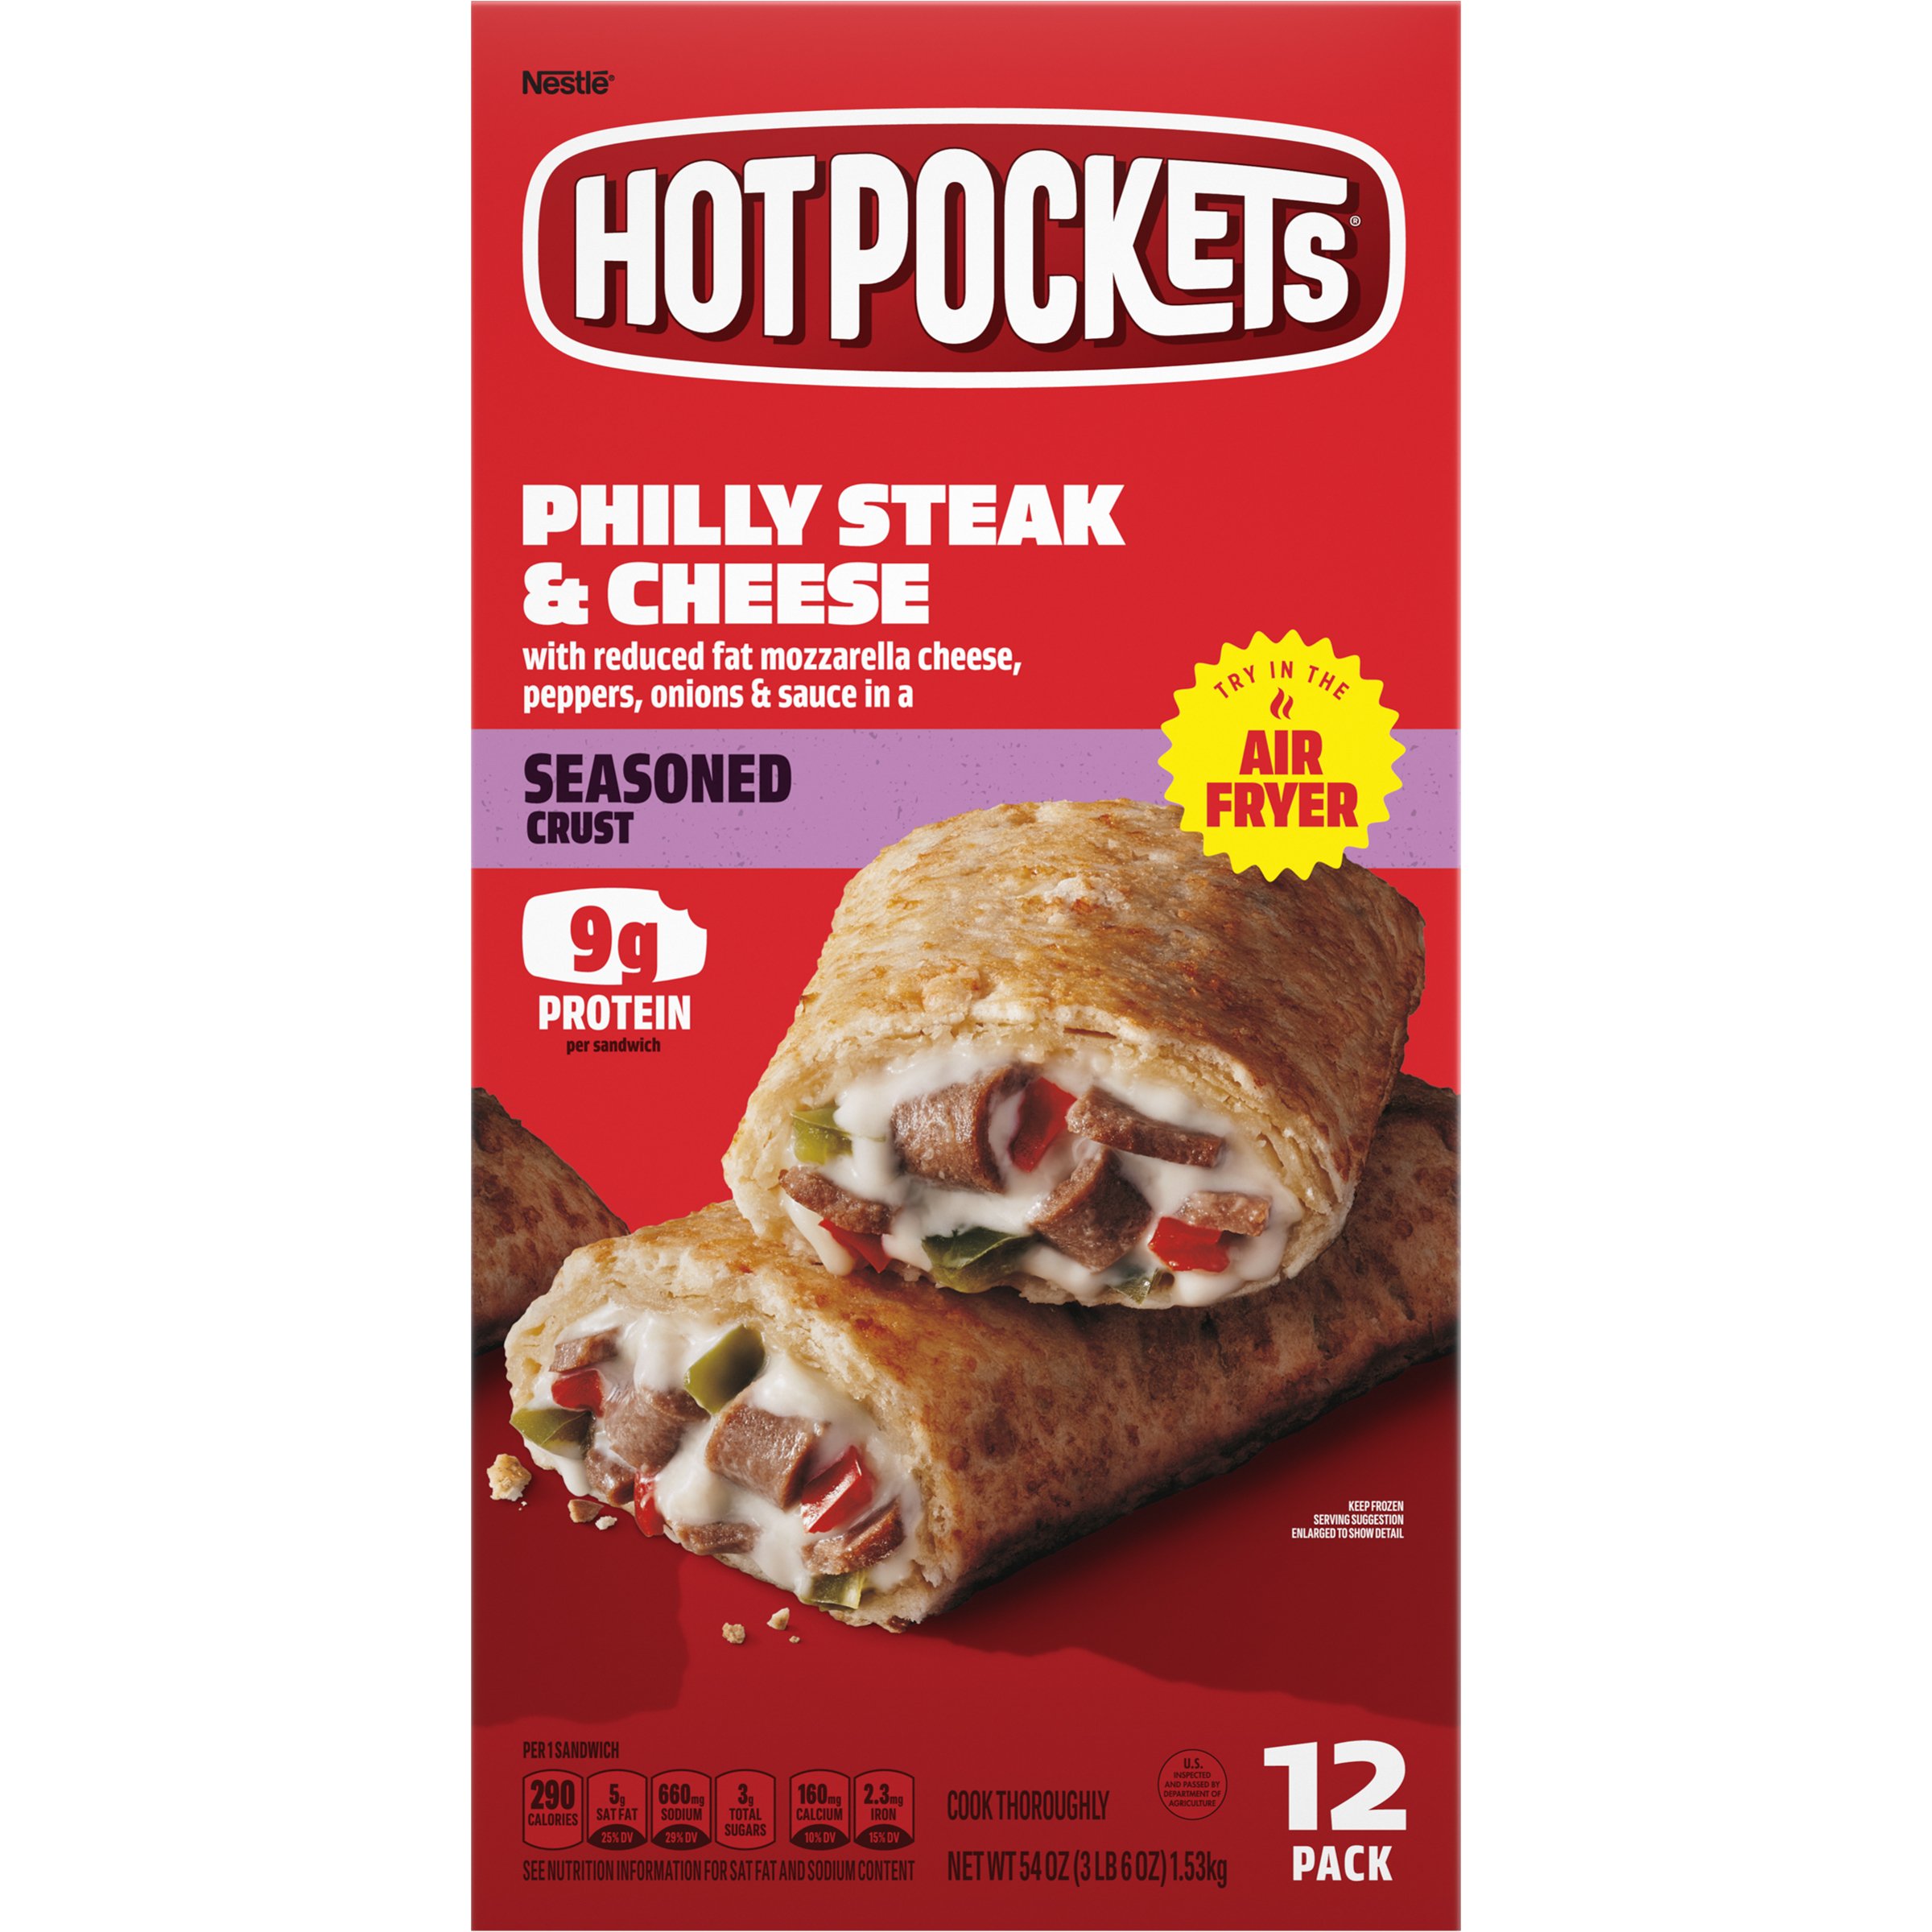 Hot Pockets Deliwich Cheddar & Ham Sandwiches - Shop Entrees & Sides at  H-E-B